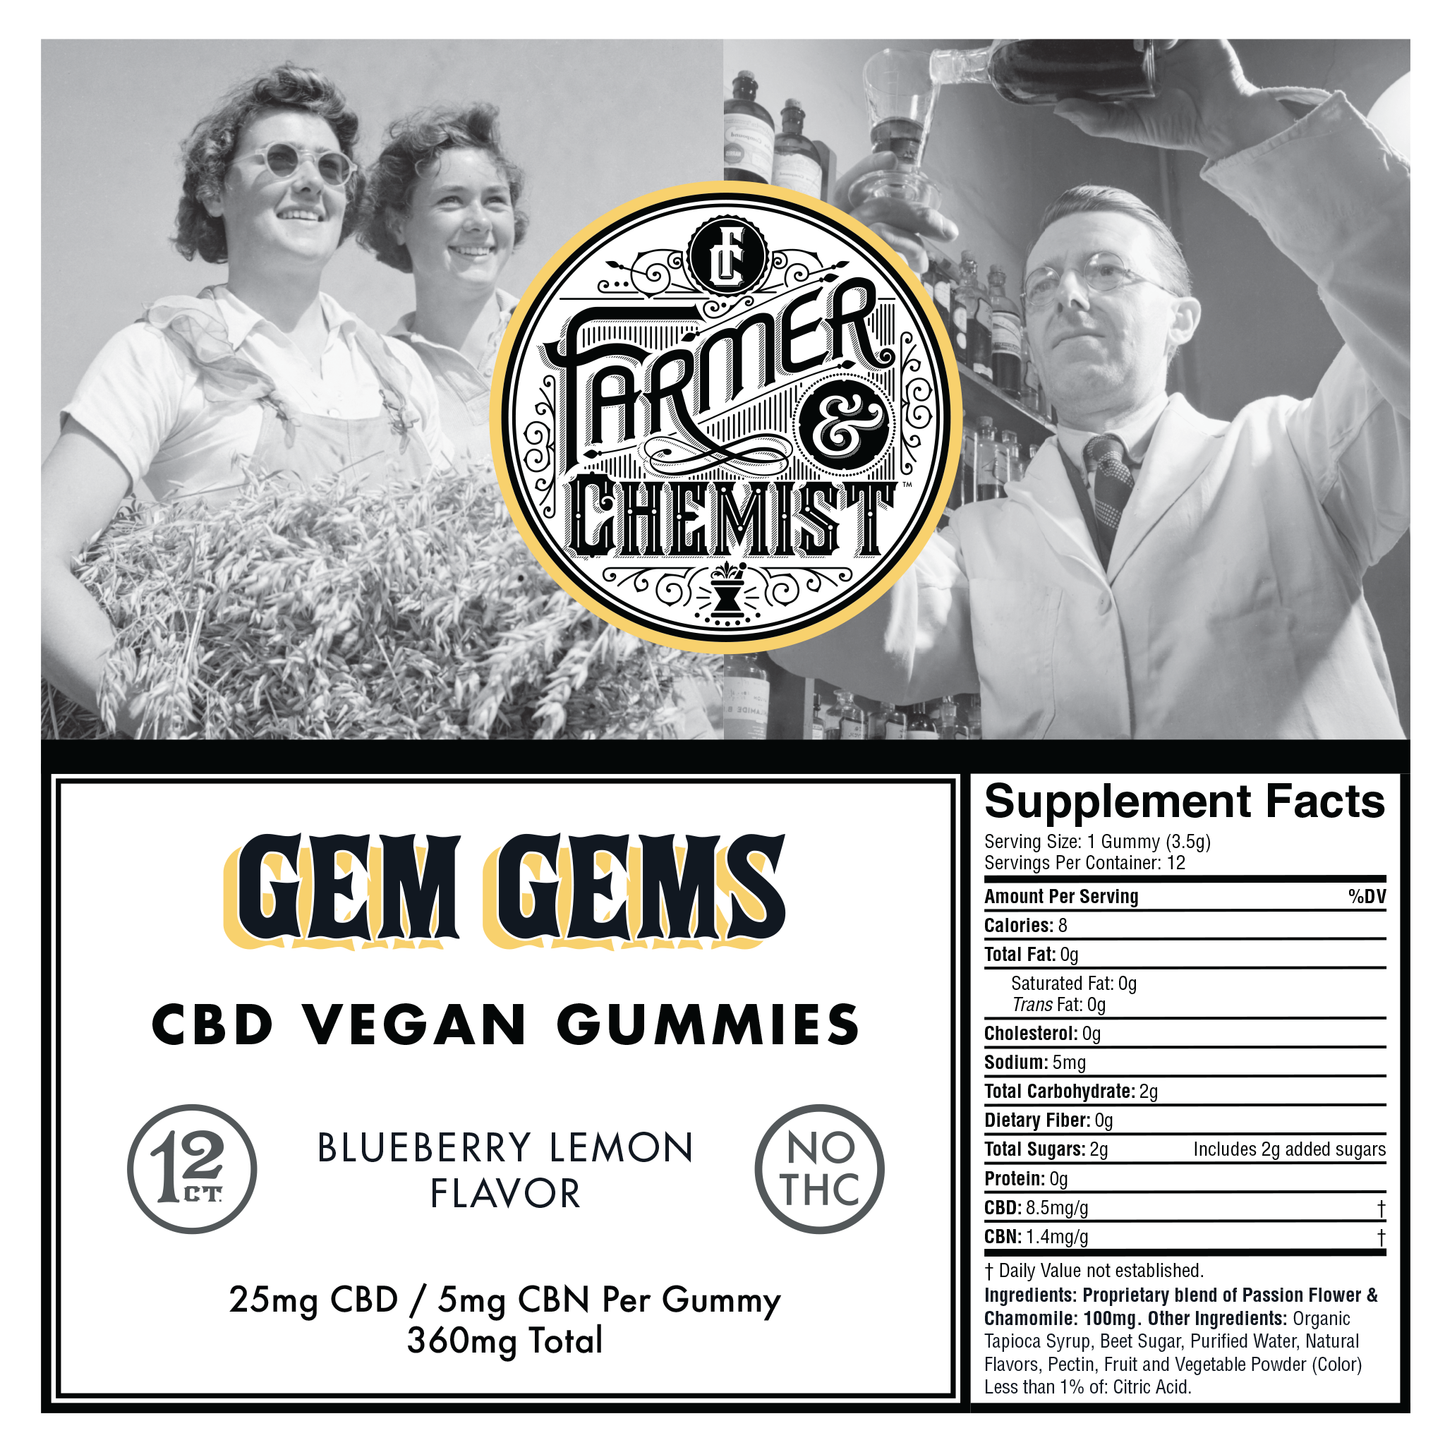 GEM GEMS - 12ct 25mg CBD / 5mg CBN Blueberry Lemon Flavor